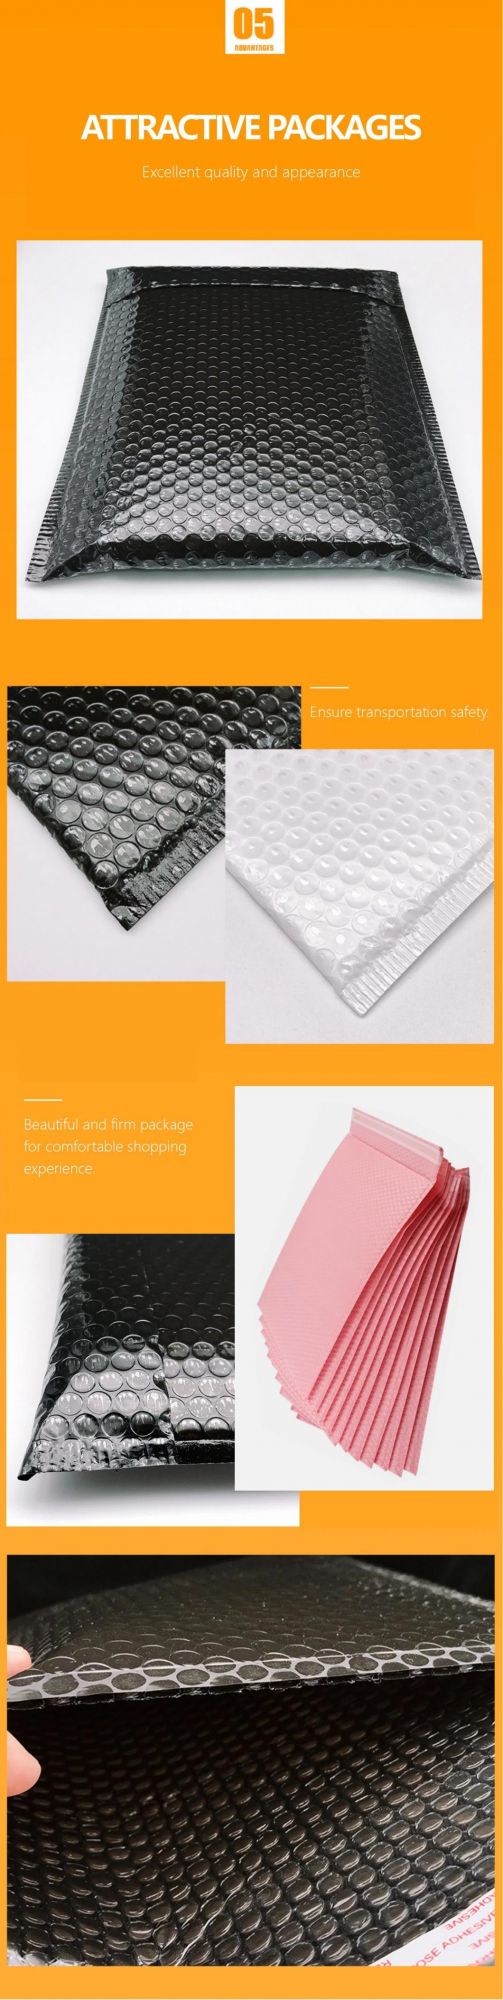 Padded Envelope/Metallic Poly Bubble Mailer